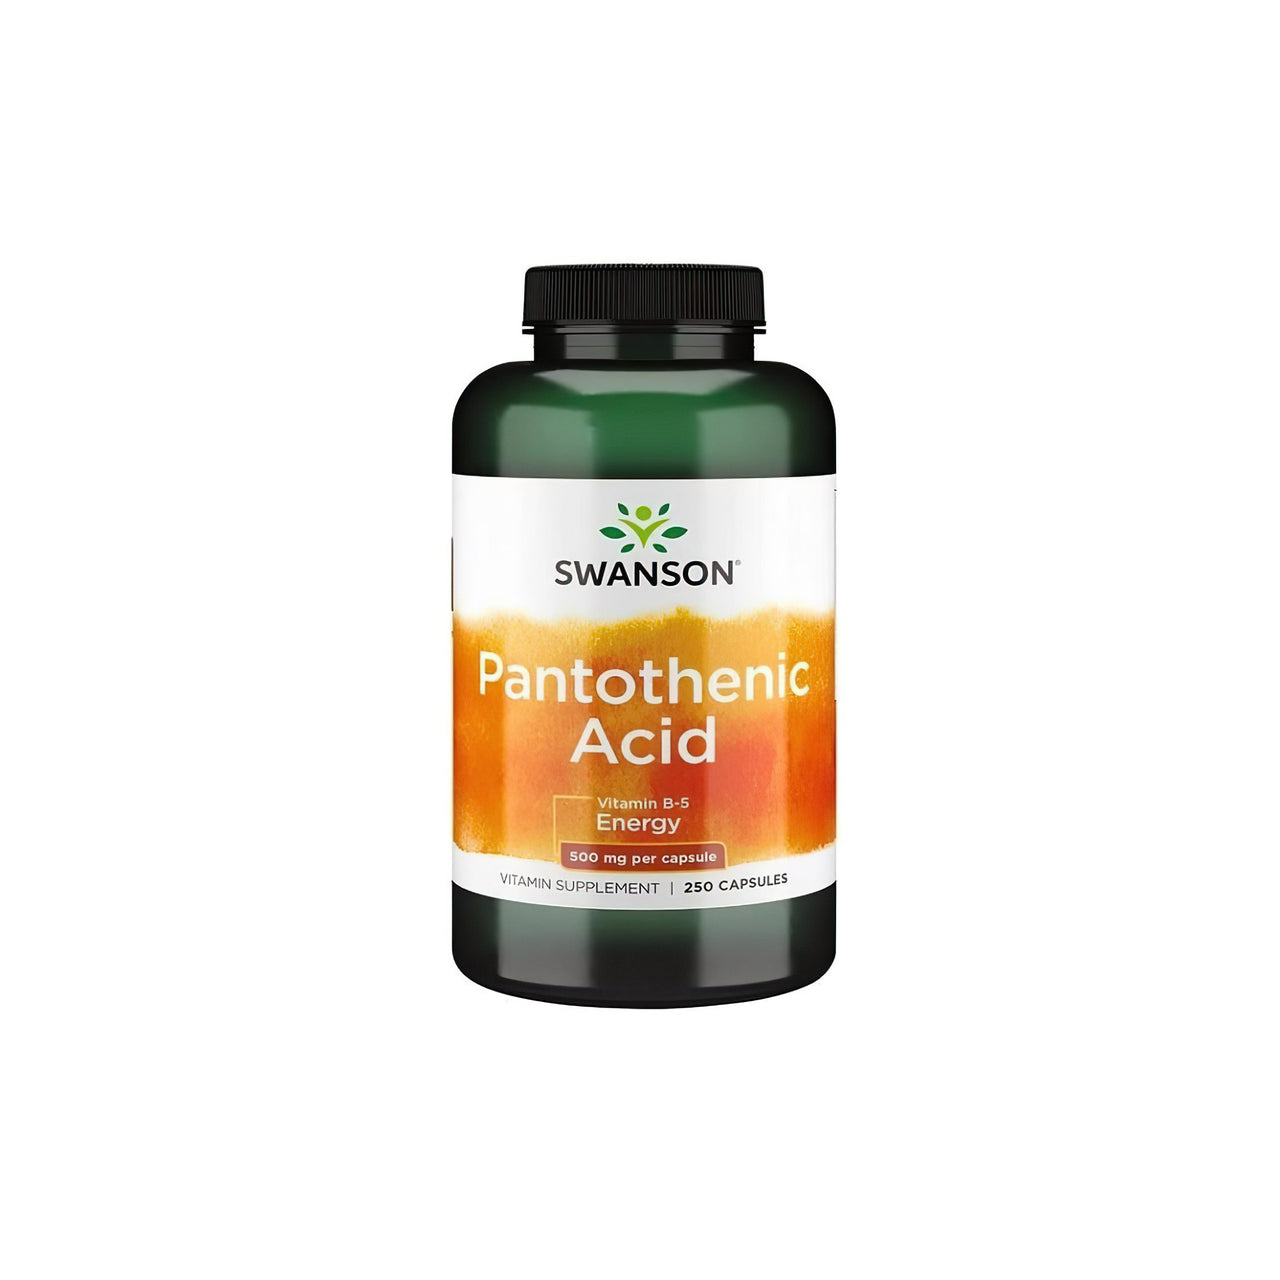 Bottle of Swanson Pantothenic Acid Vitamin B5 dietary supplement for skin regeneration and energy metabolism, 250 capsules.